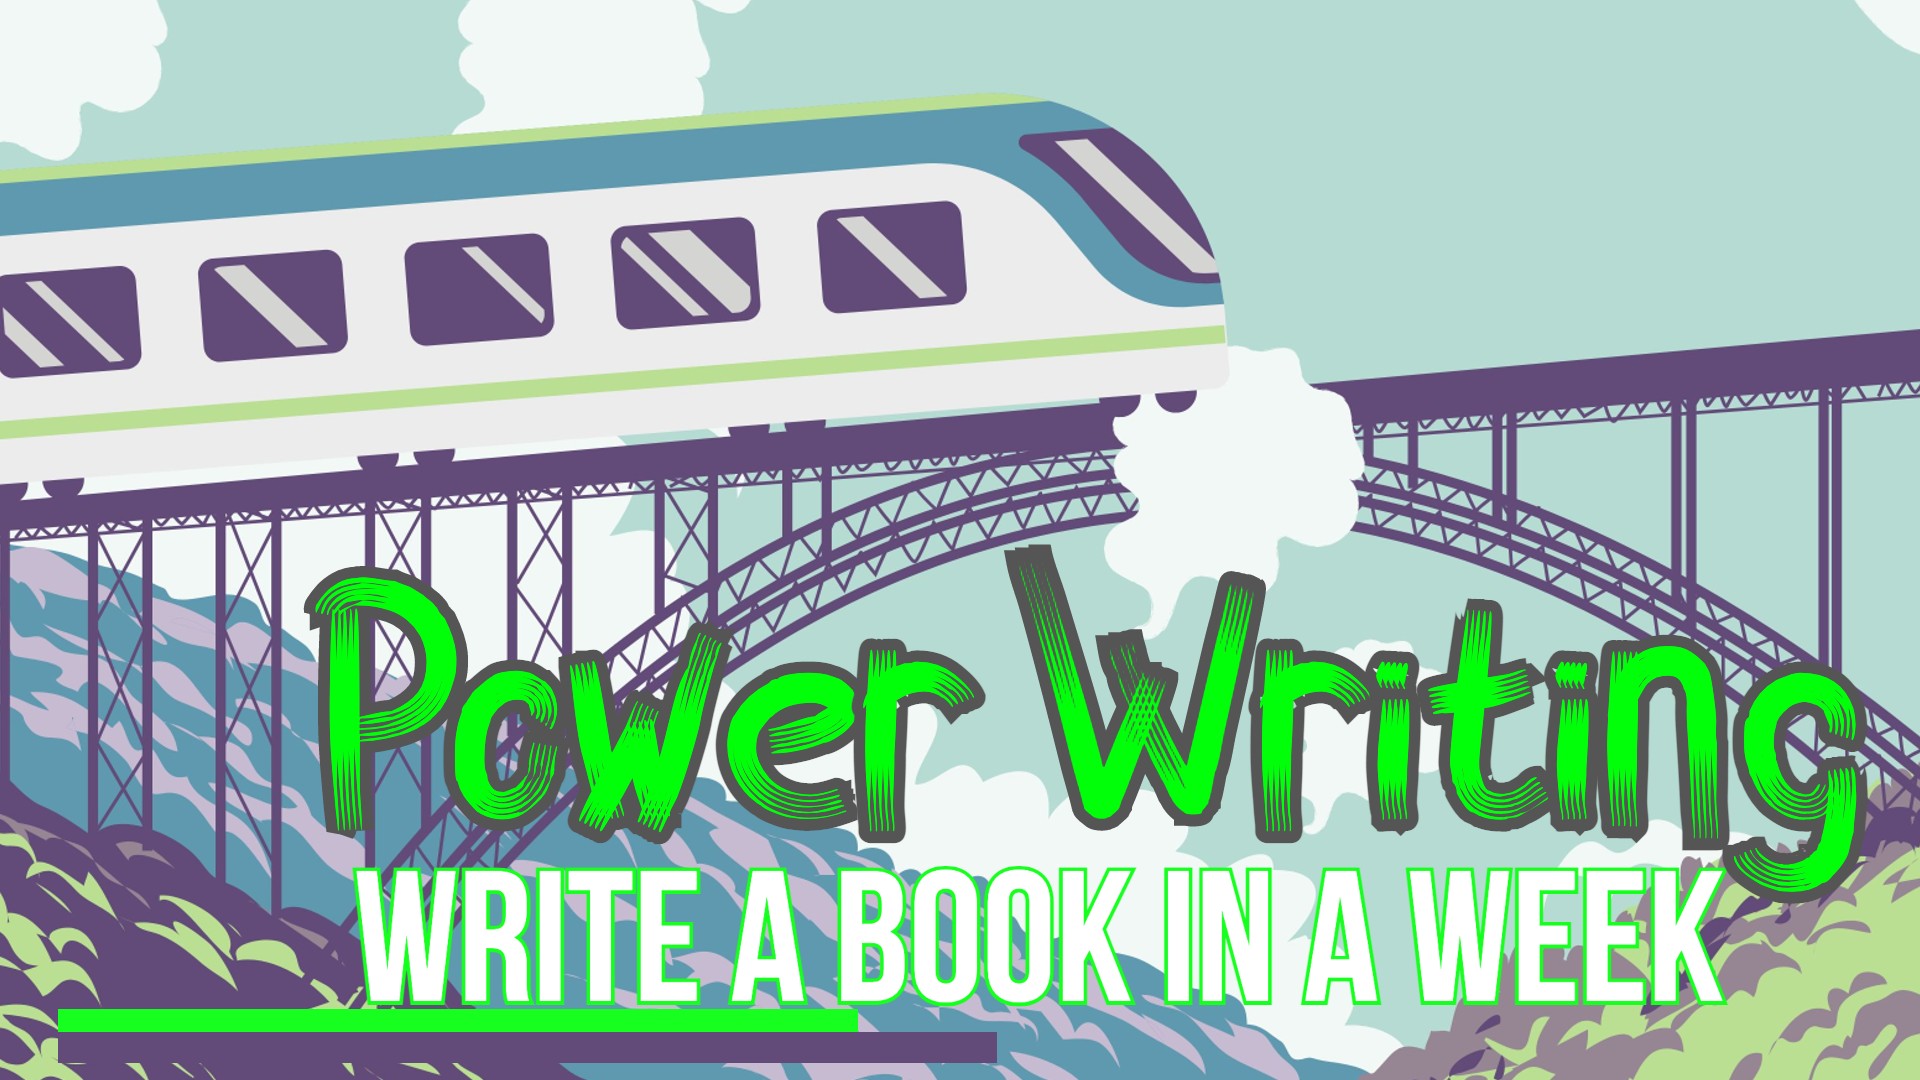 Power Writing: Write a Book in a Week